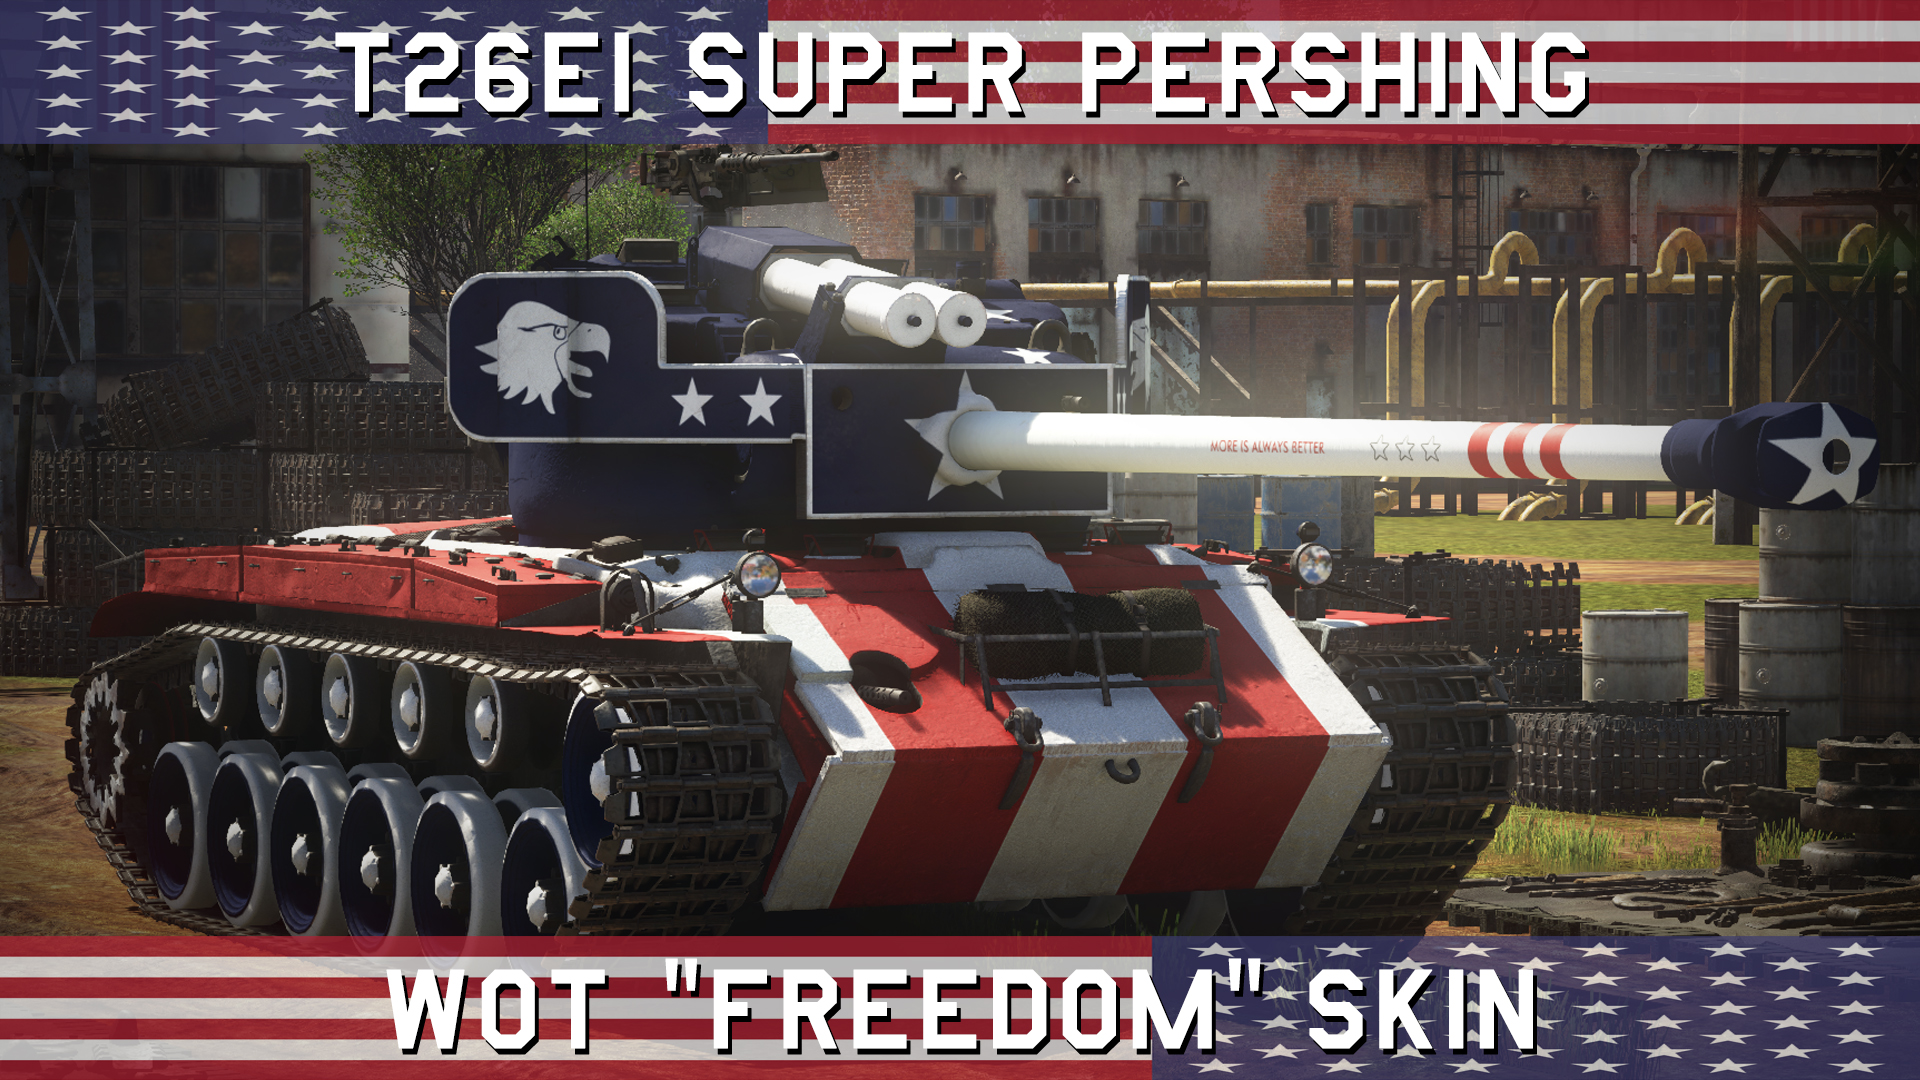 Pershing wot super T26E4 SuperPershing: